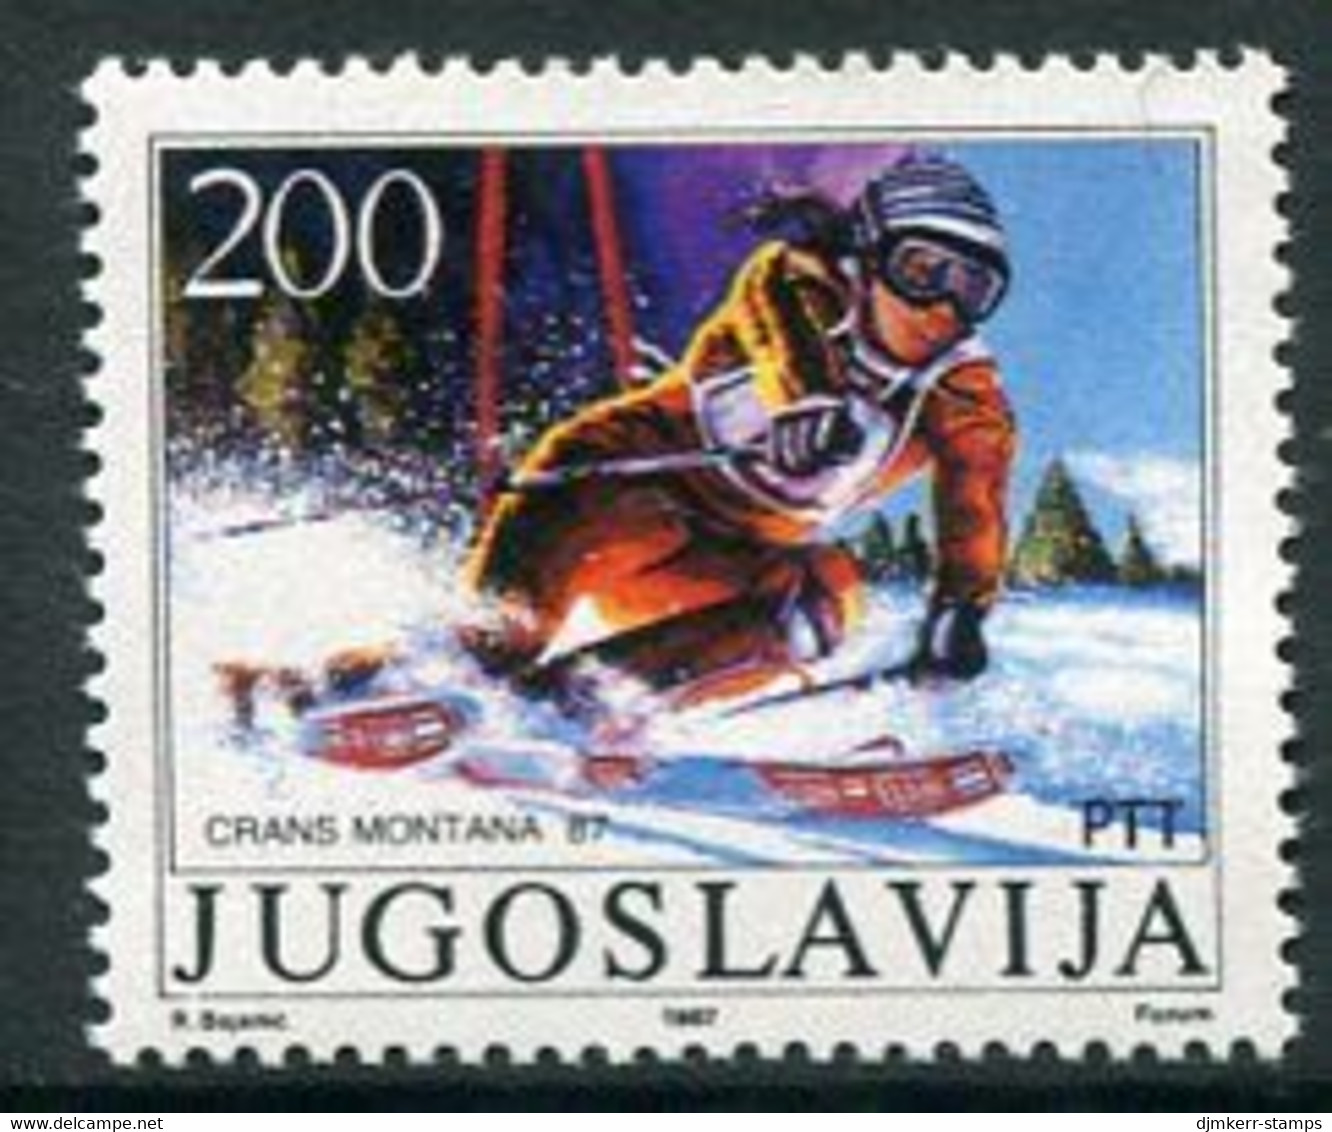 YUGOSLAVIA 1987 Skiing Medal-Winner MNH / **.  Michel 2215 - Neufs